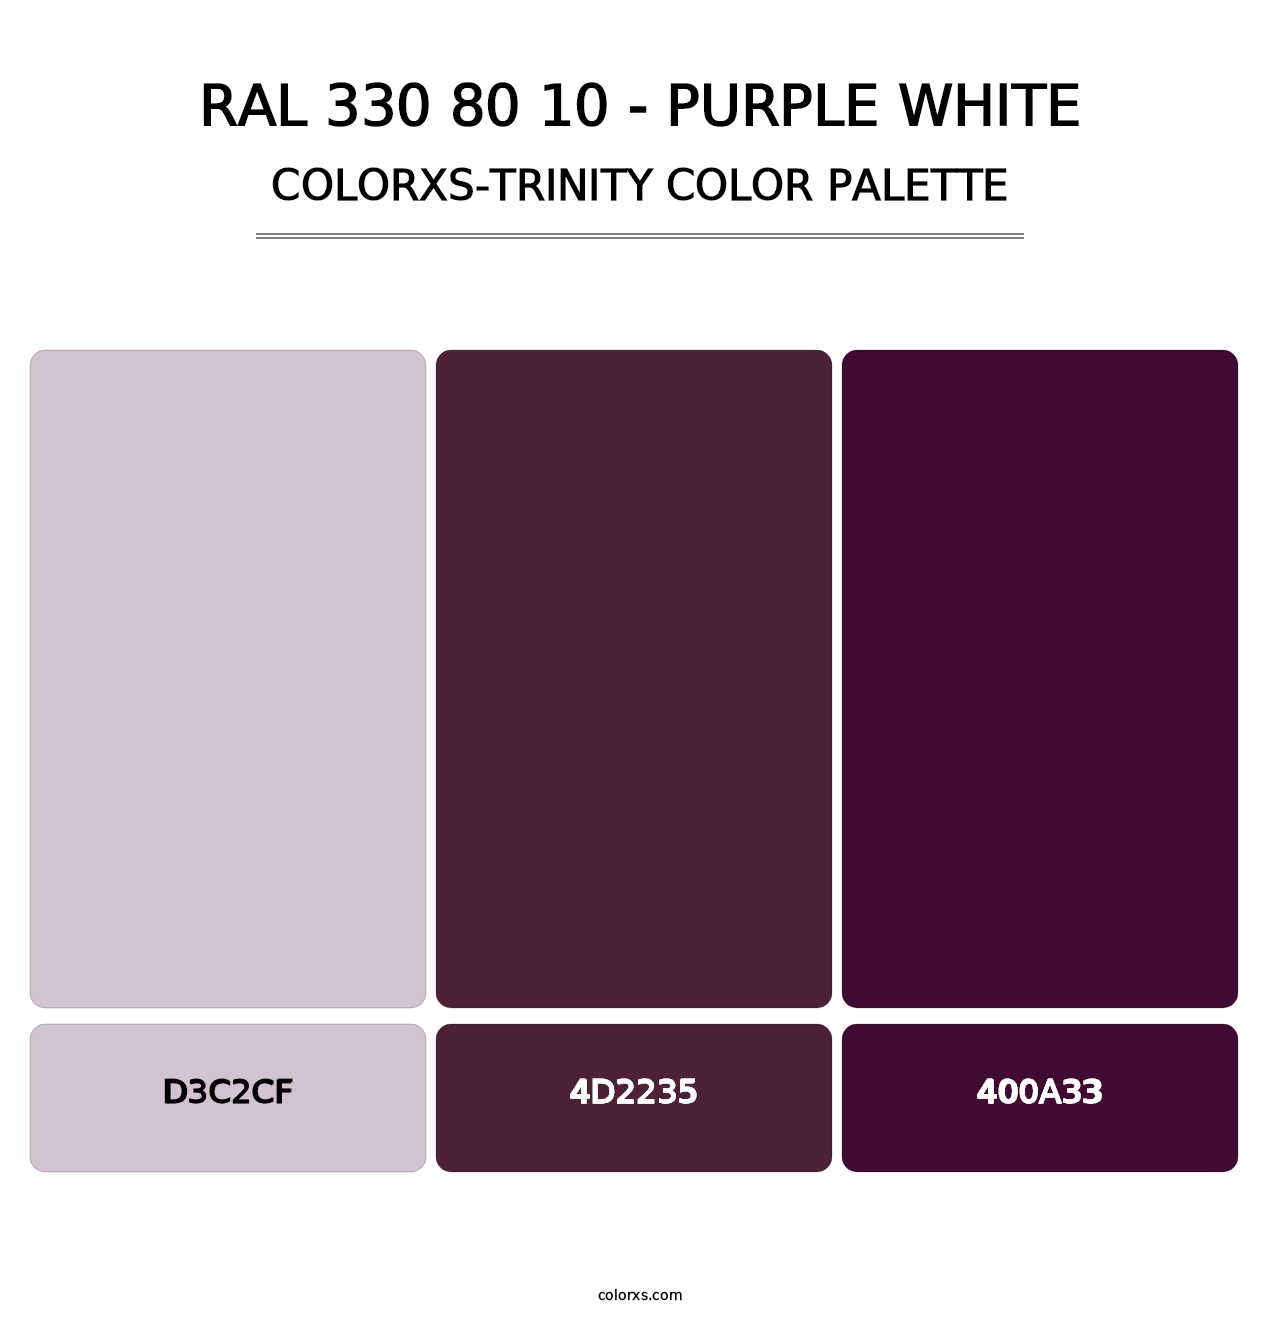 RAL 330 80 10 - Purple White - Colorxs Trinity Palette